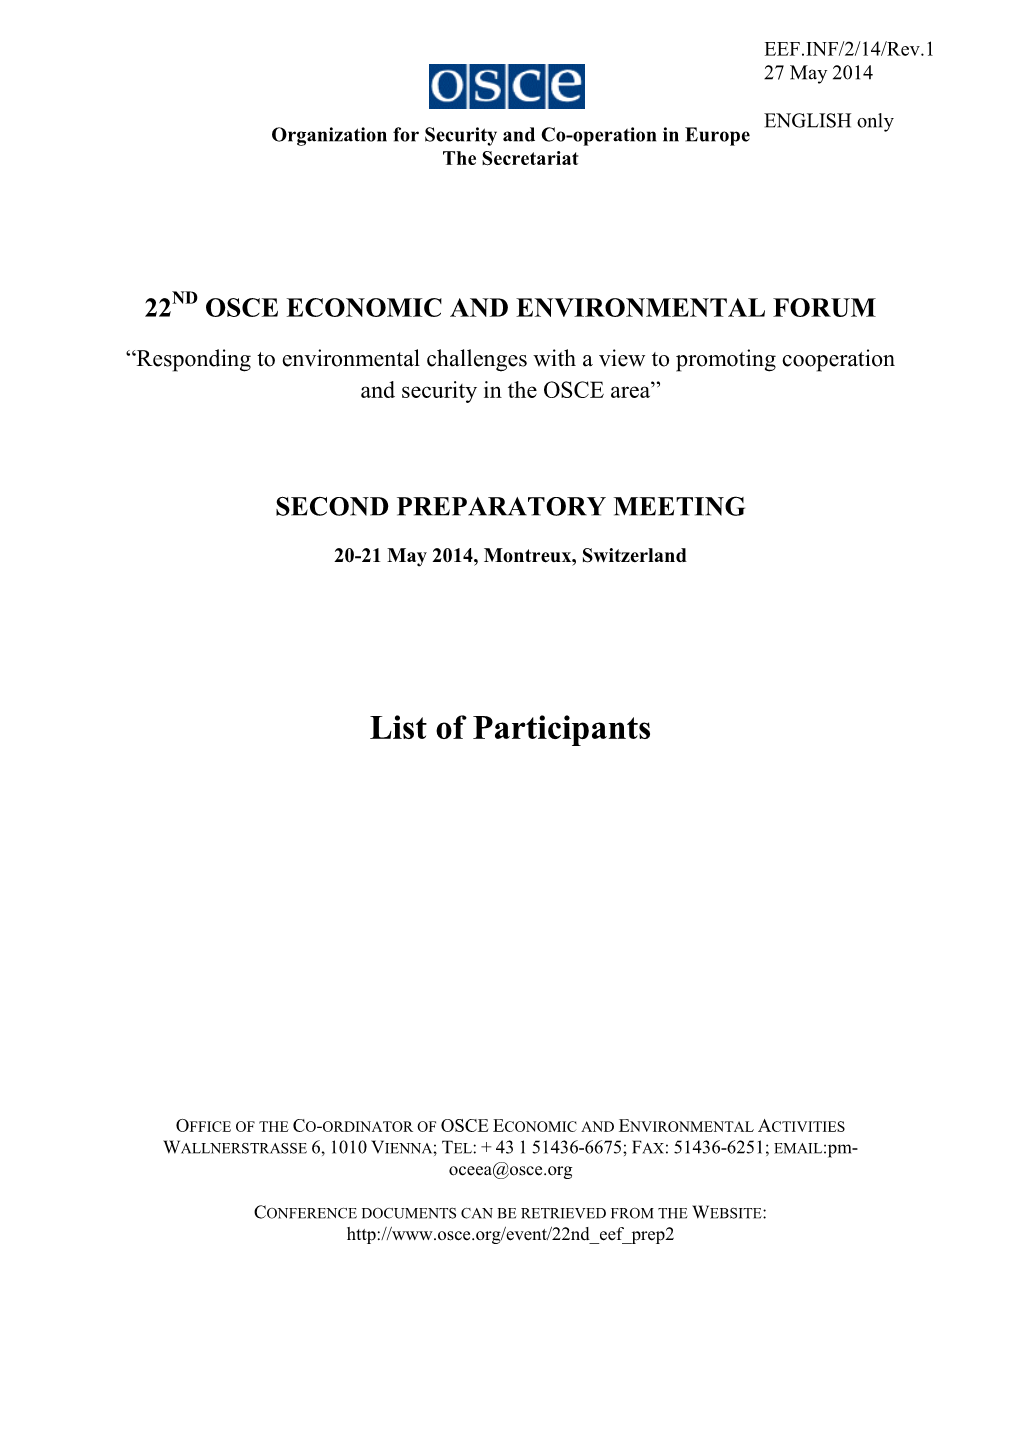 Osce Economic and Environmental Forum